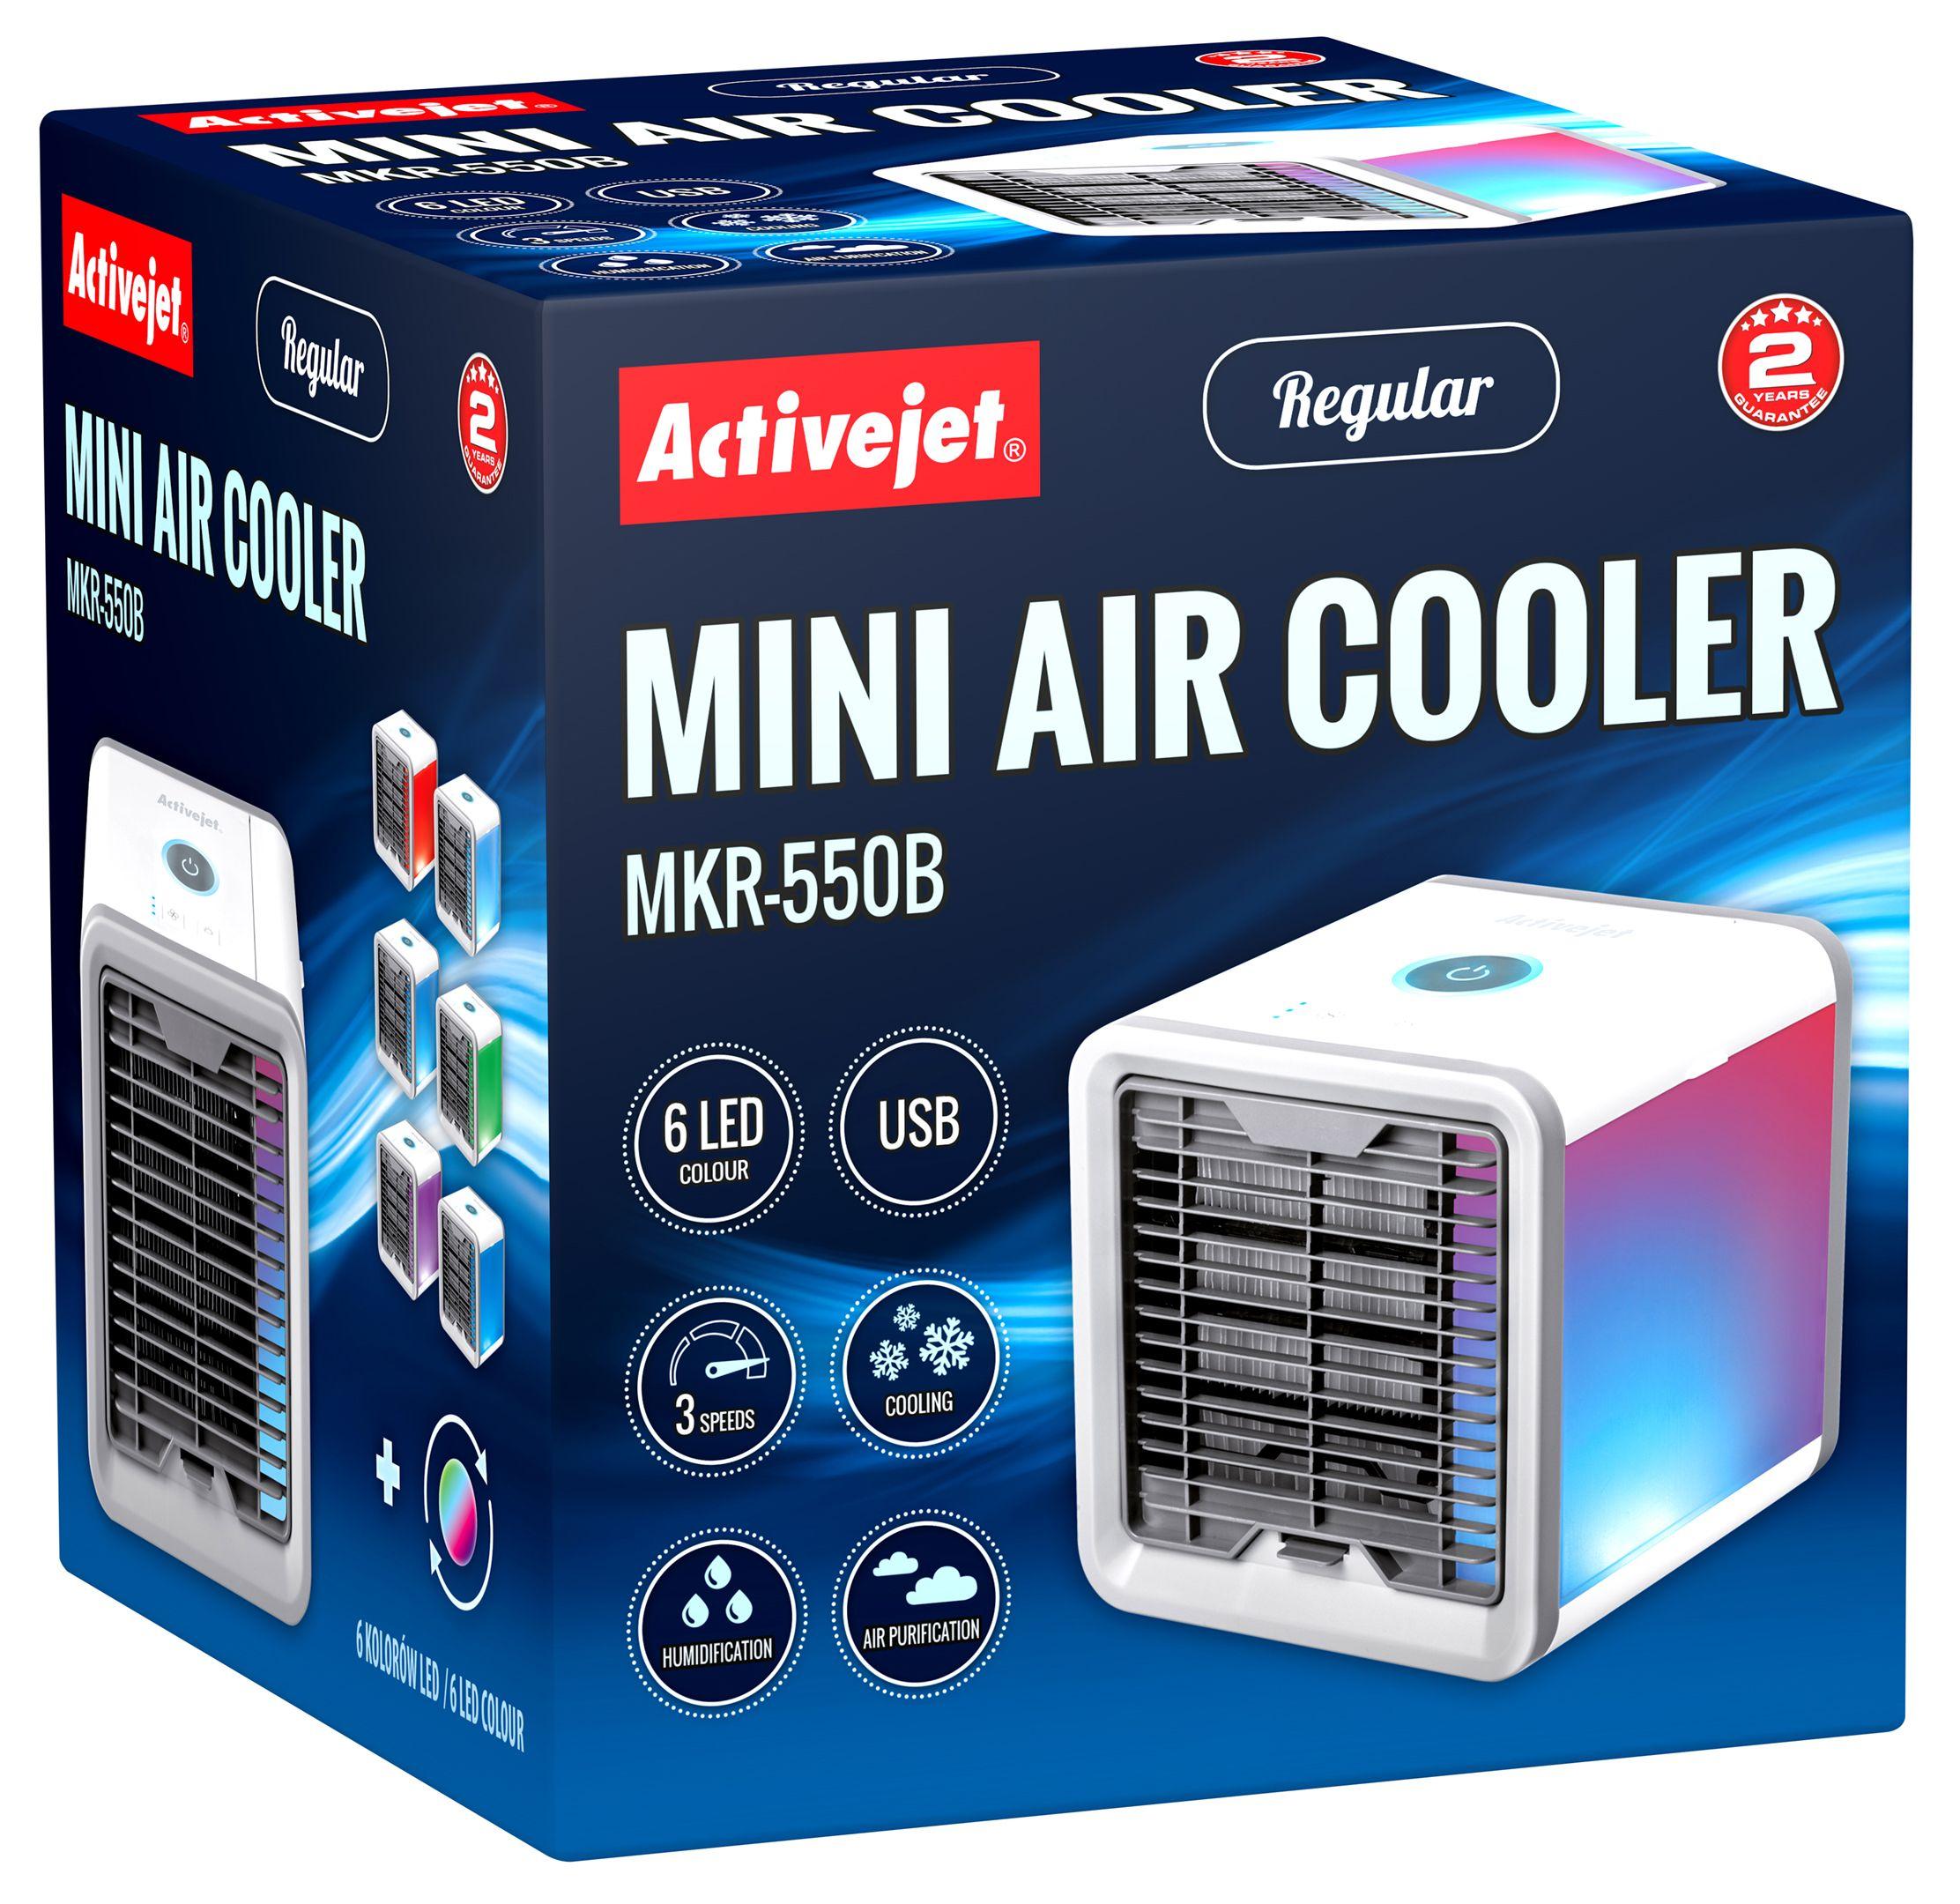 Activejet Regular MKR-550B mini air cooler